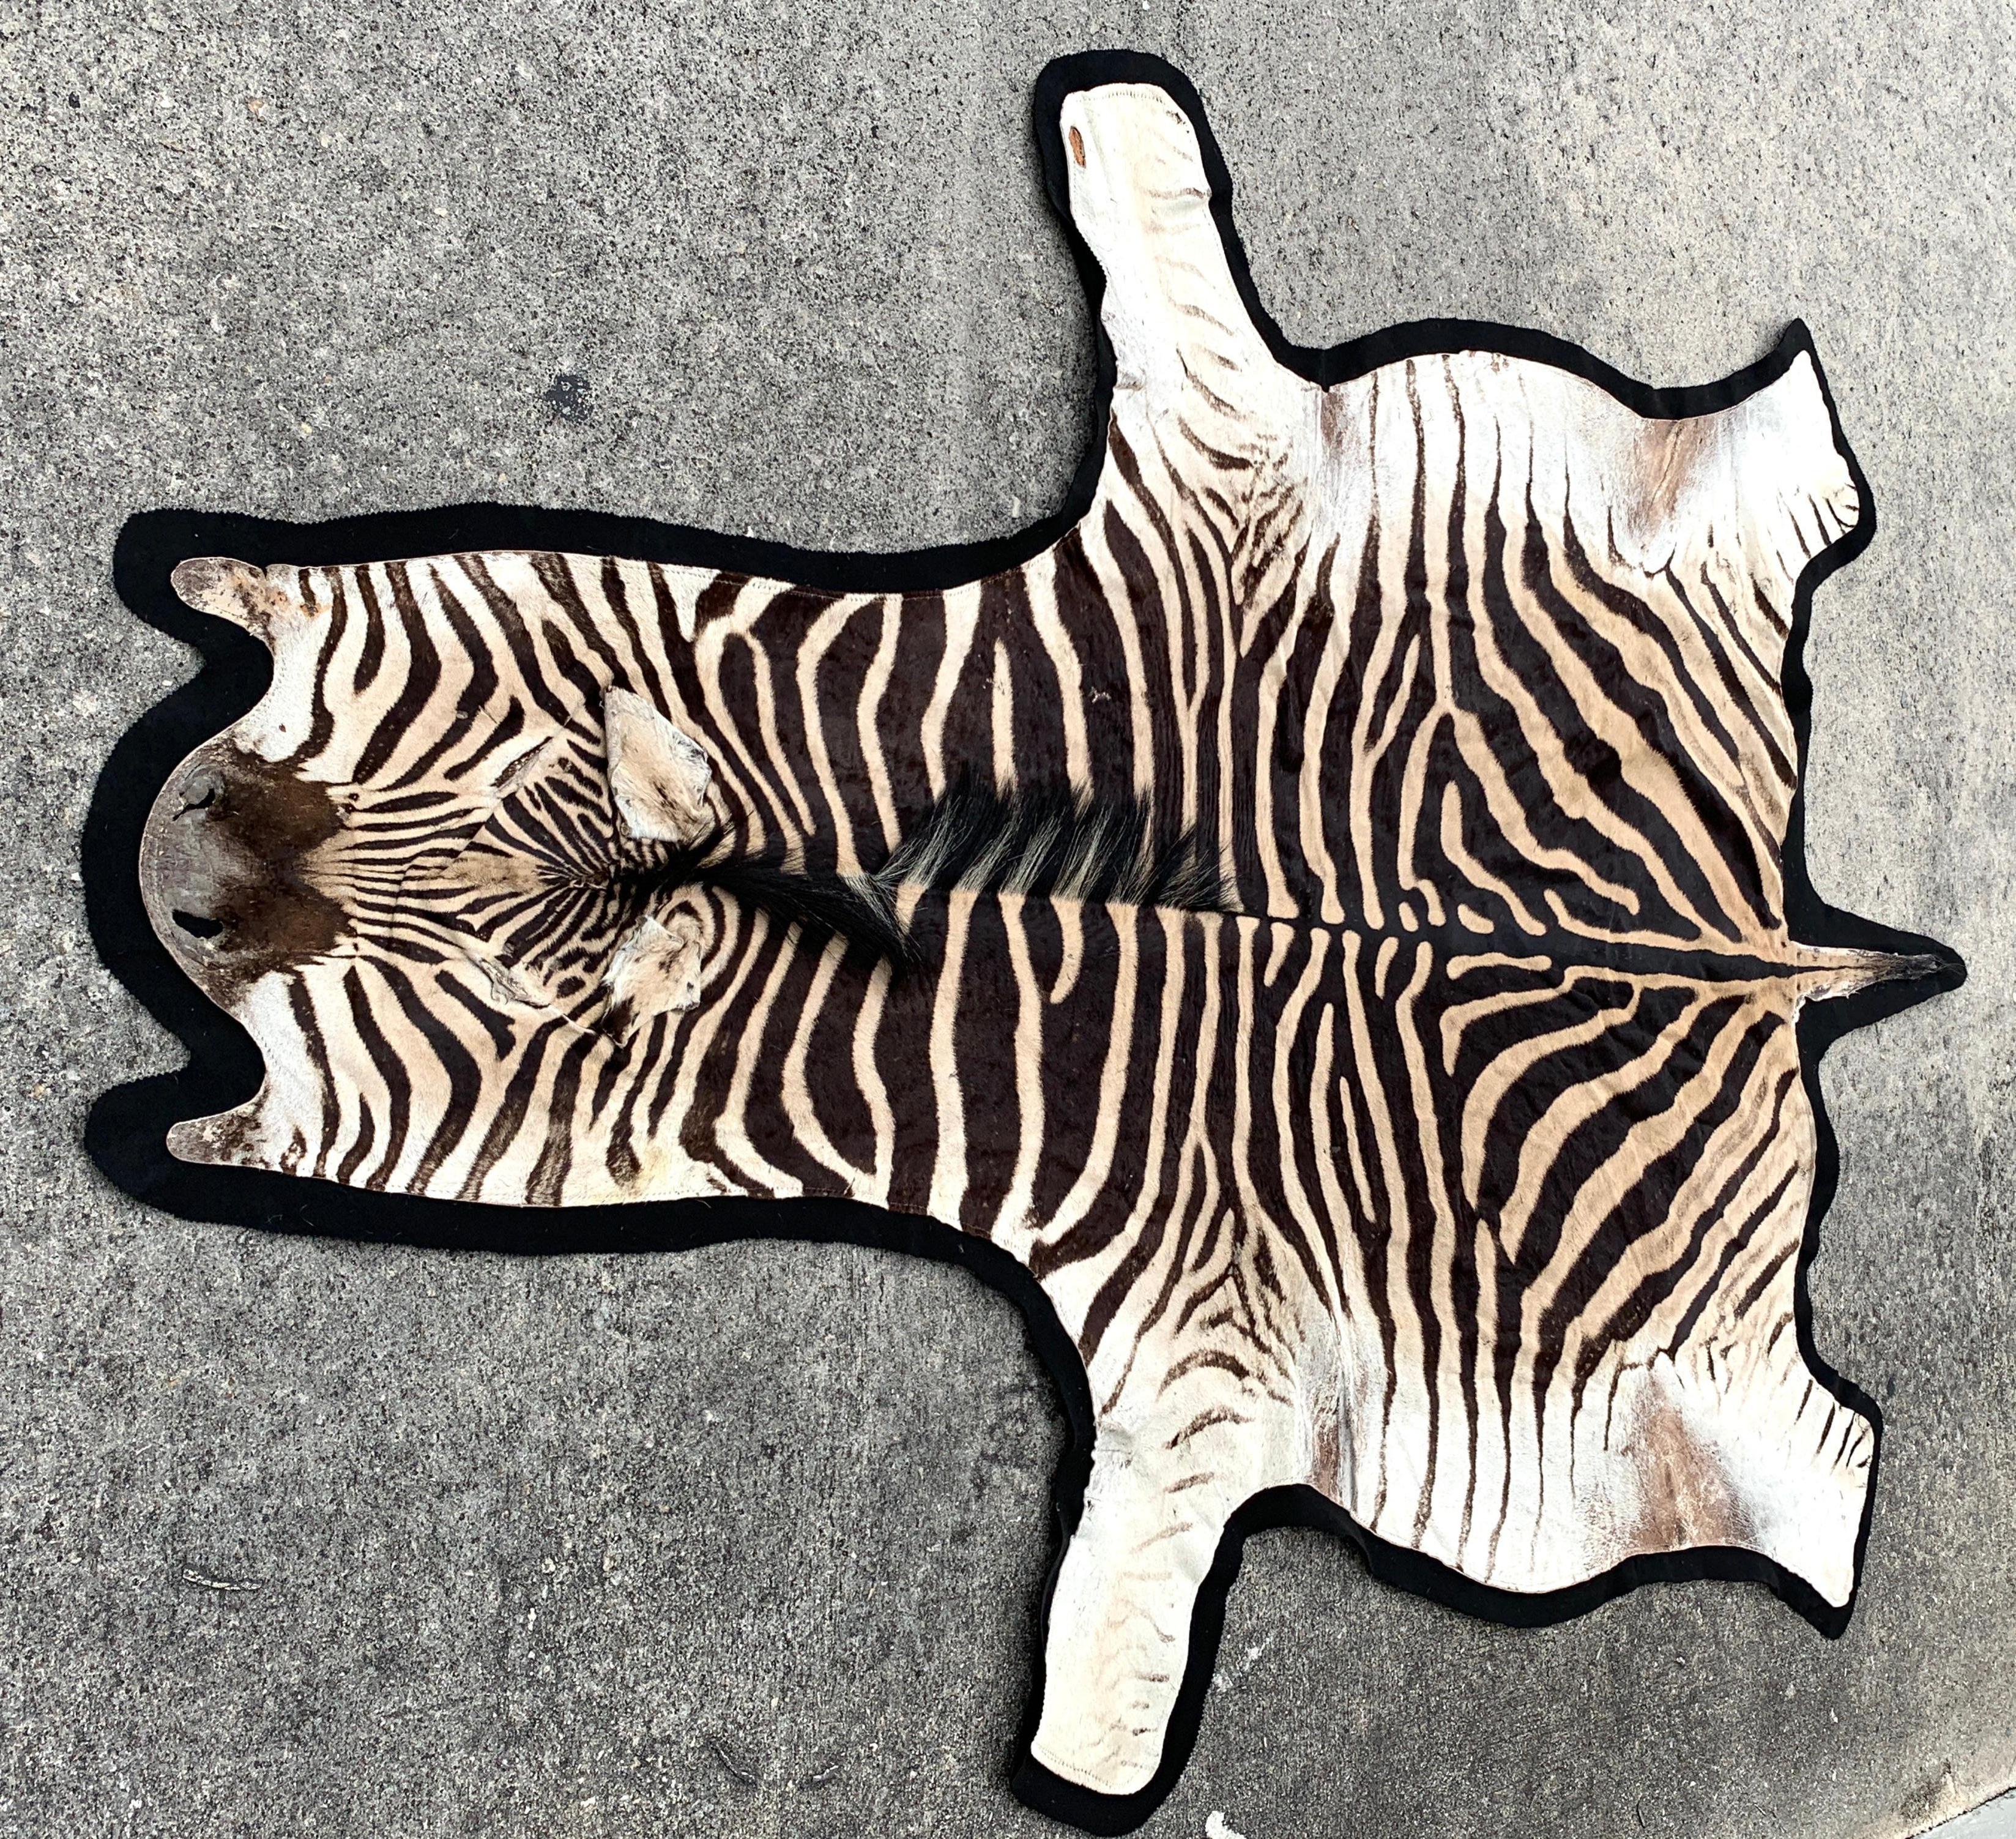 Sporting Art Vintage Zebra Hide Rug, Newly Backed